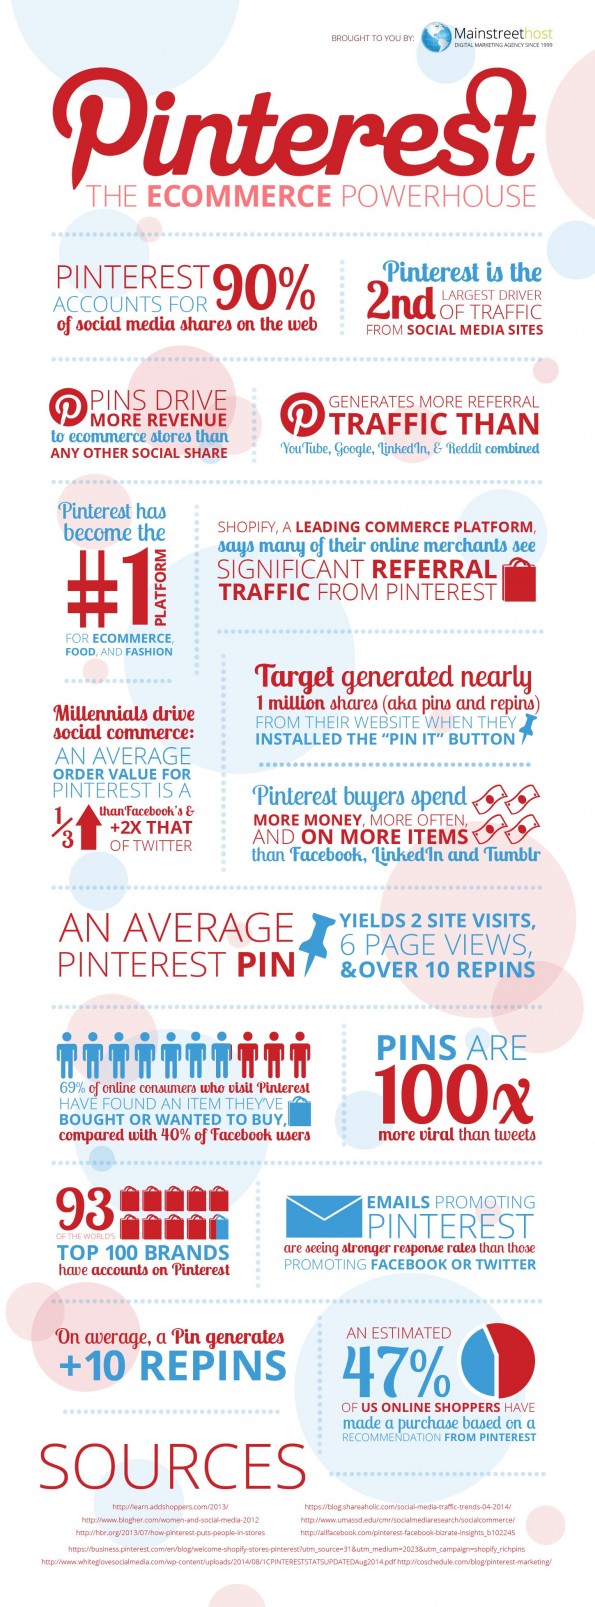 pinterest-infographic-final-05